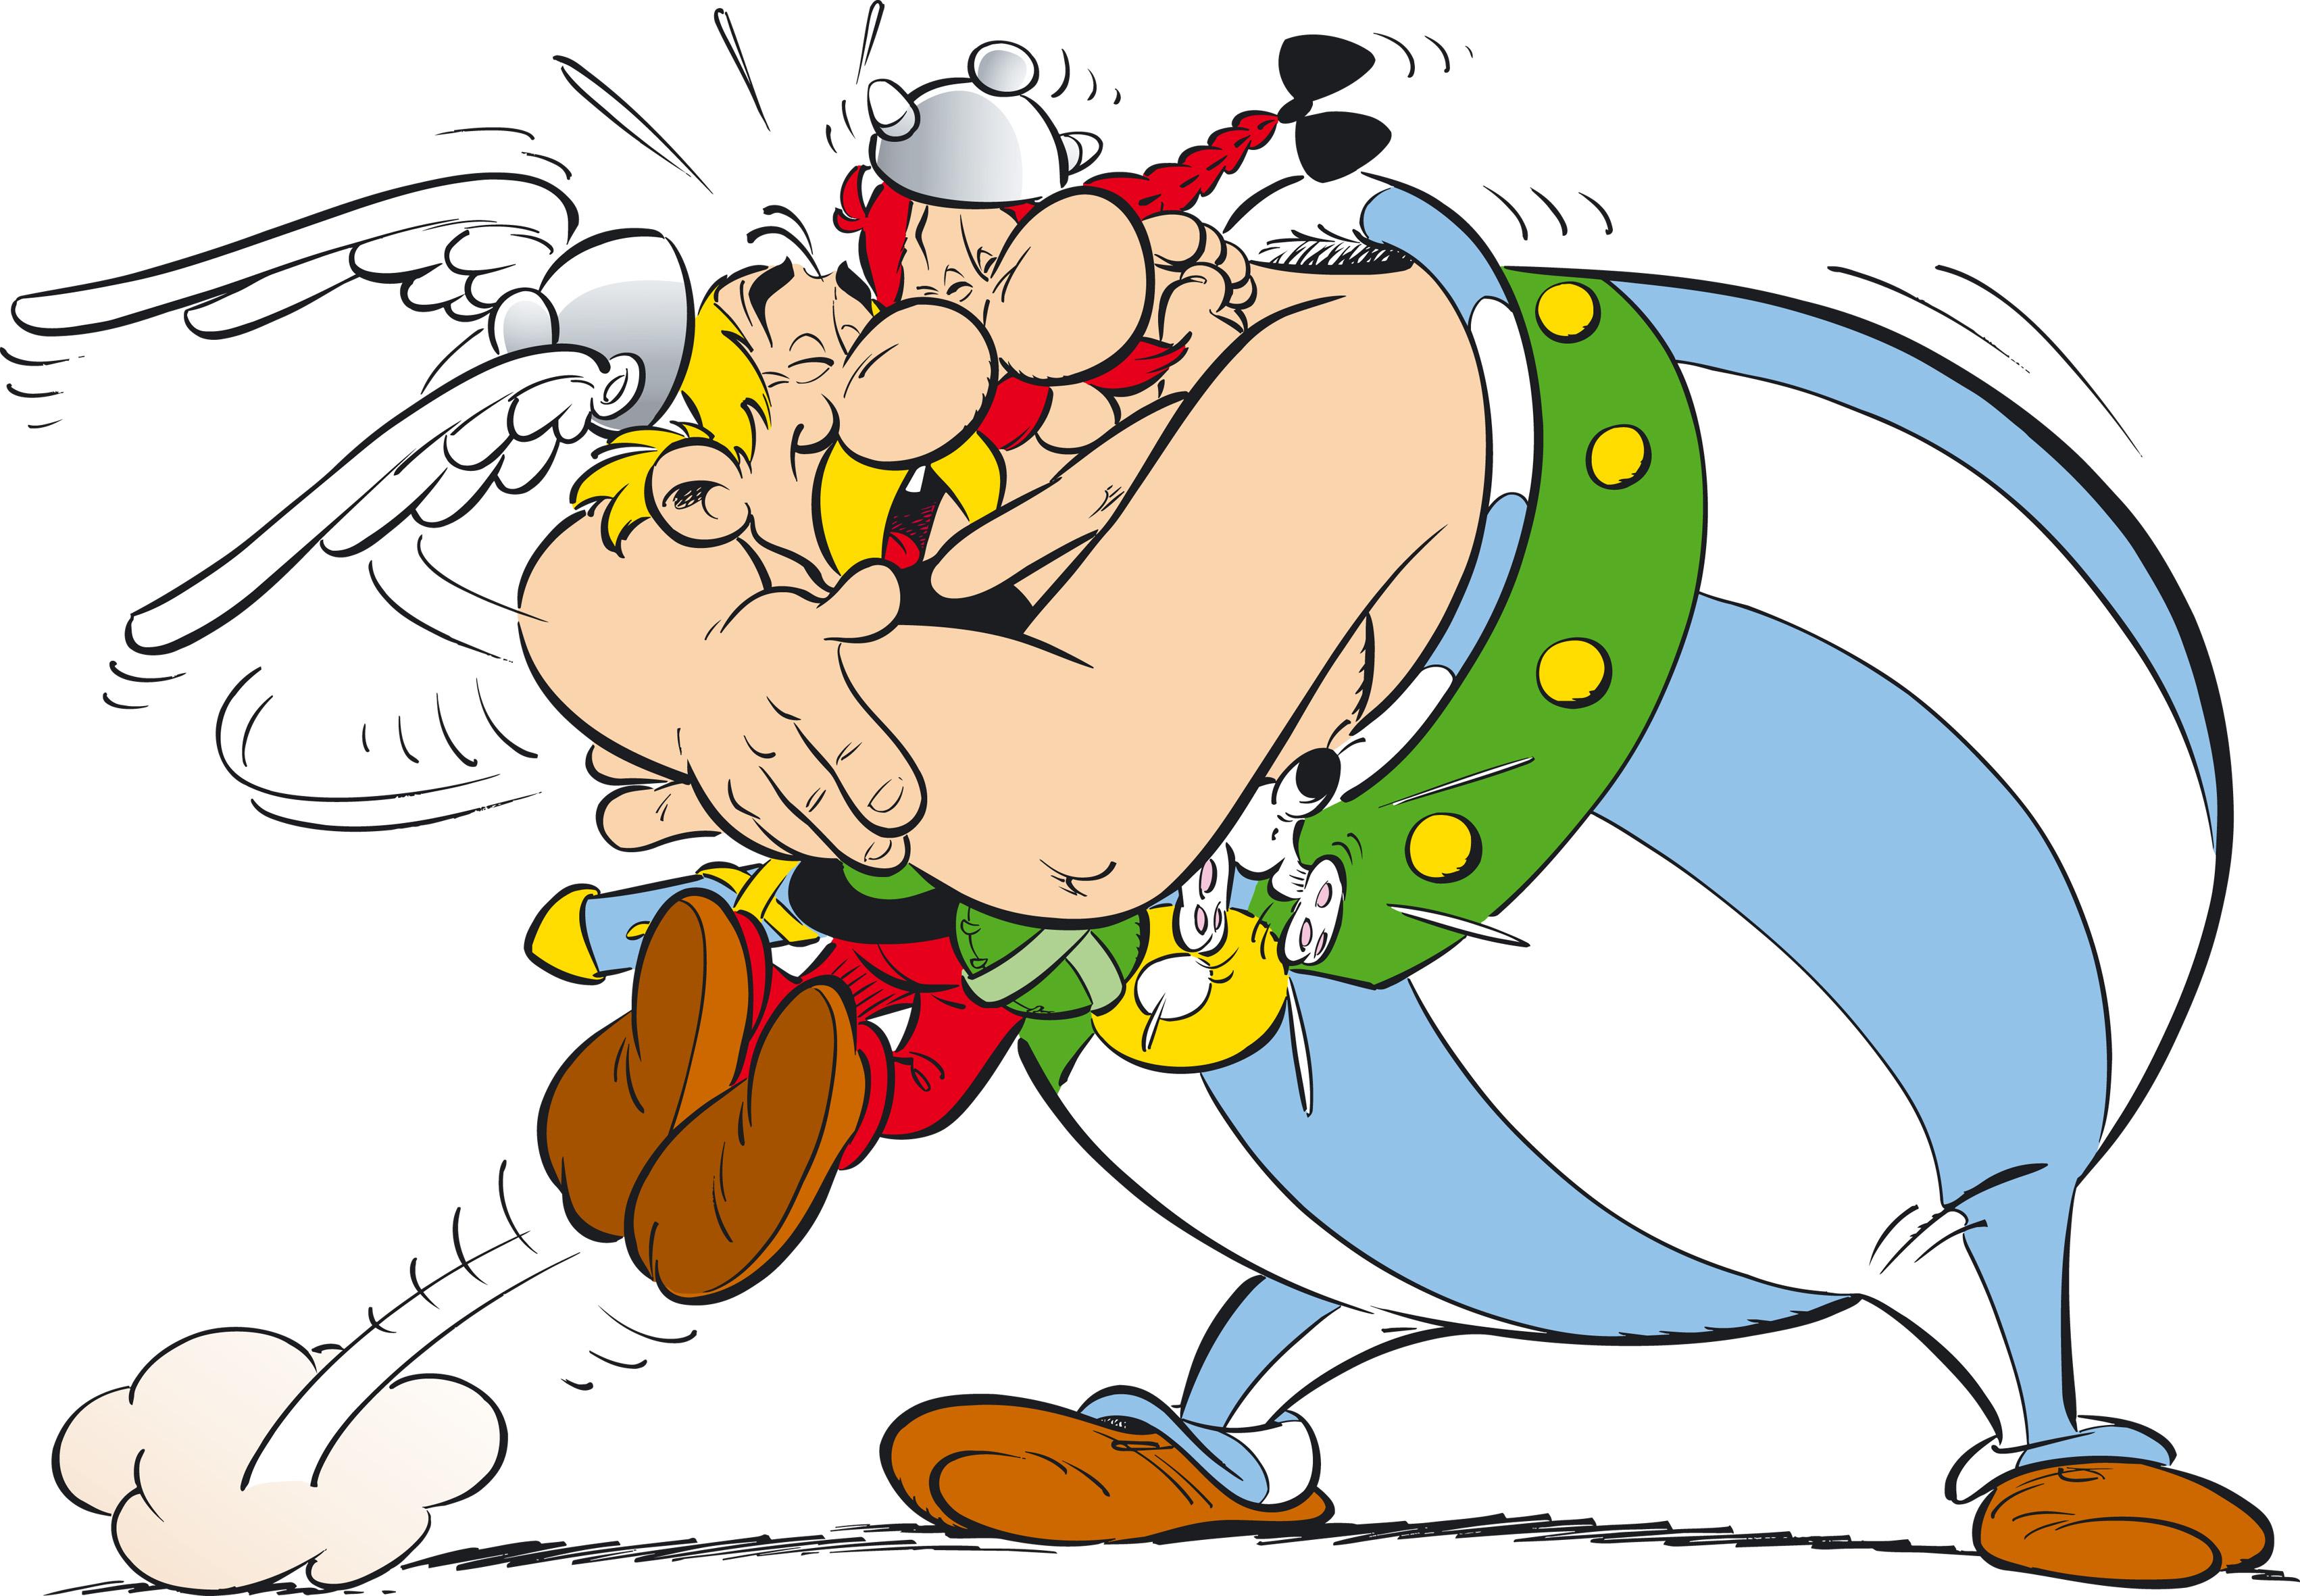 asterix-and-obelix-in-cartoons-and-destinations